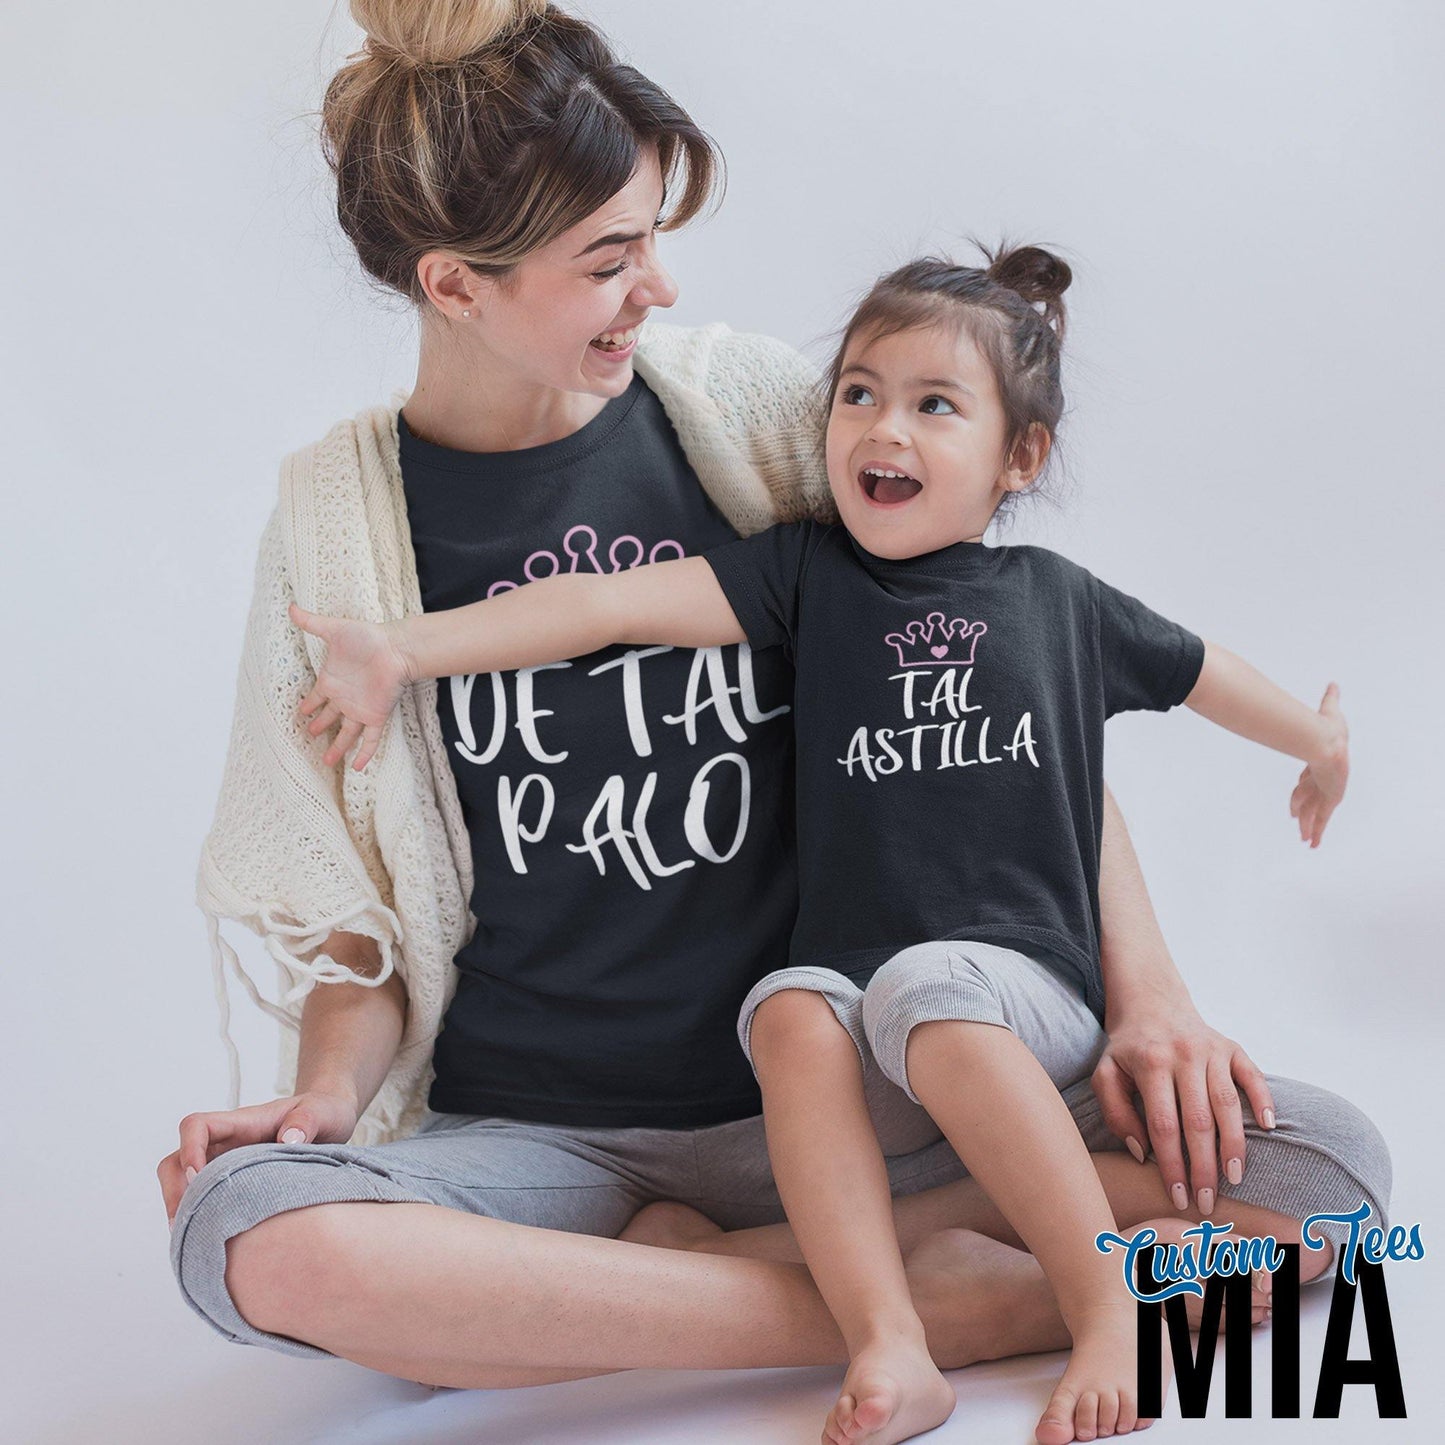 De Tal Palo Tal Astilla Matching Latina Mom & Daughter Shirts - Custom Tees MIA